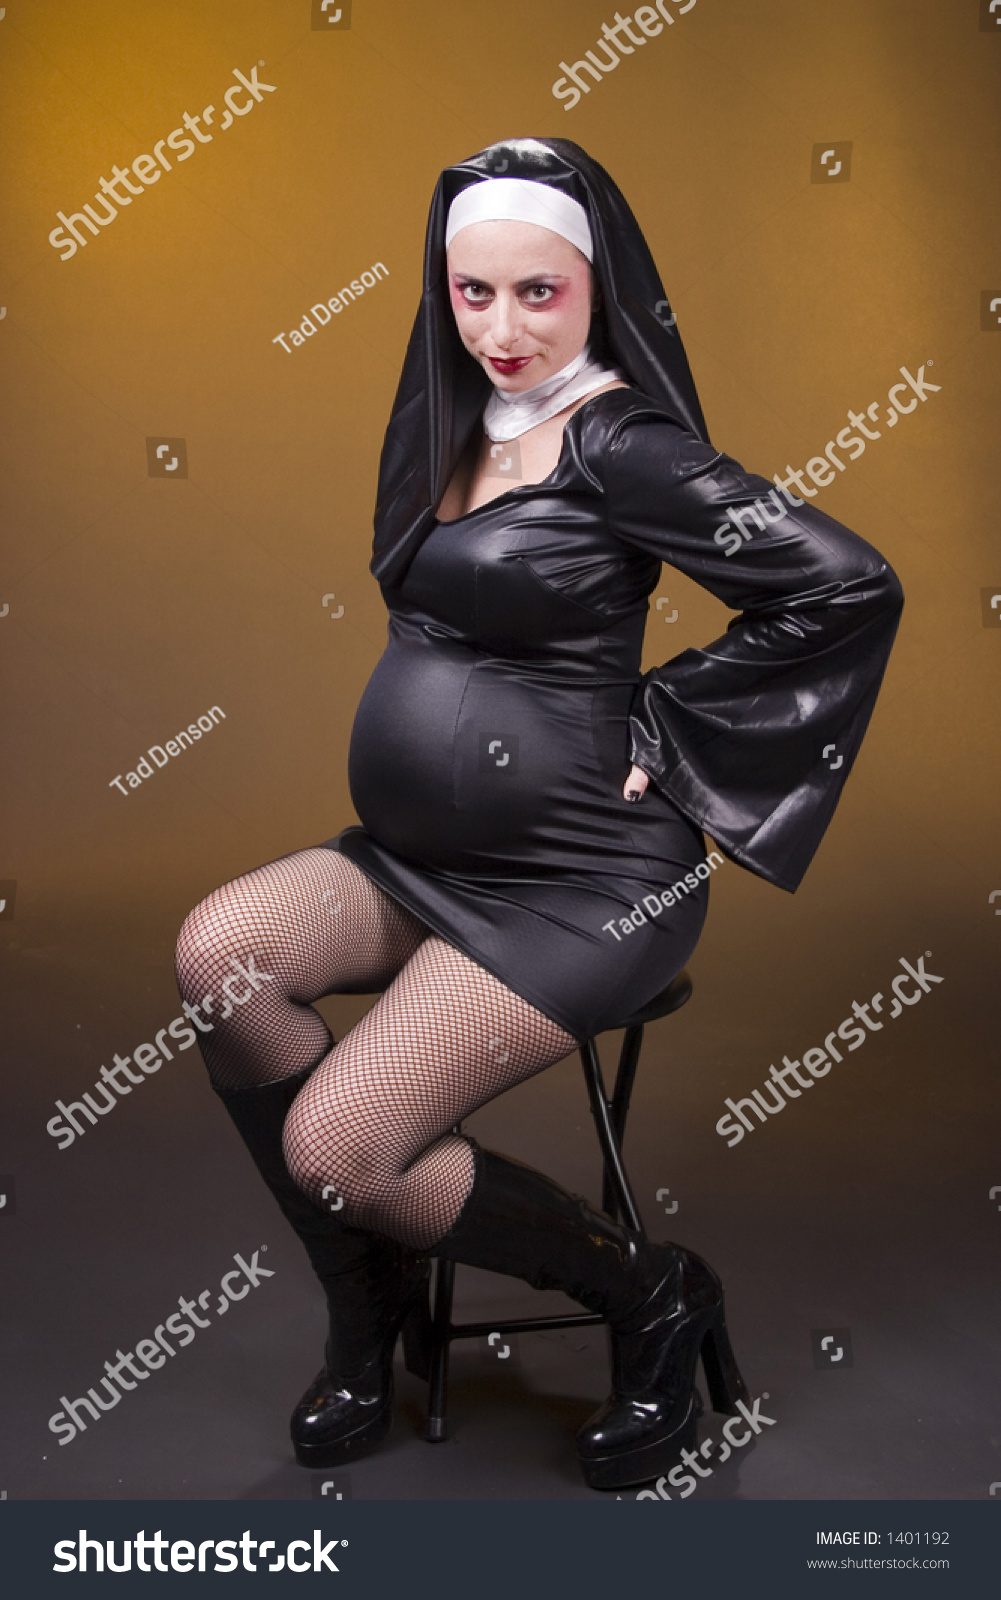 Стоковая фотография 1401192: Humorous Costume Pregnant Nun Shutterstock.